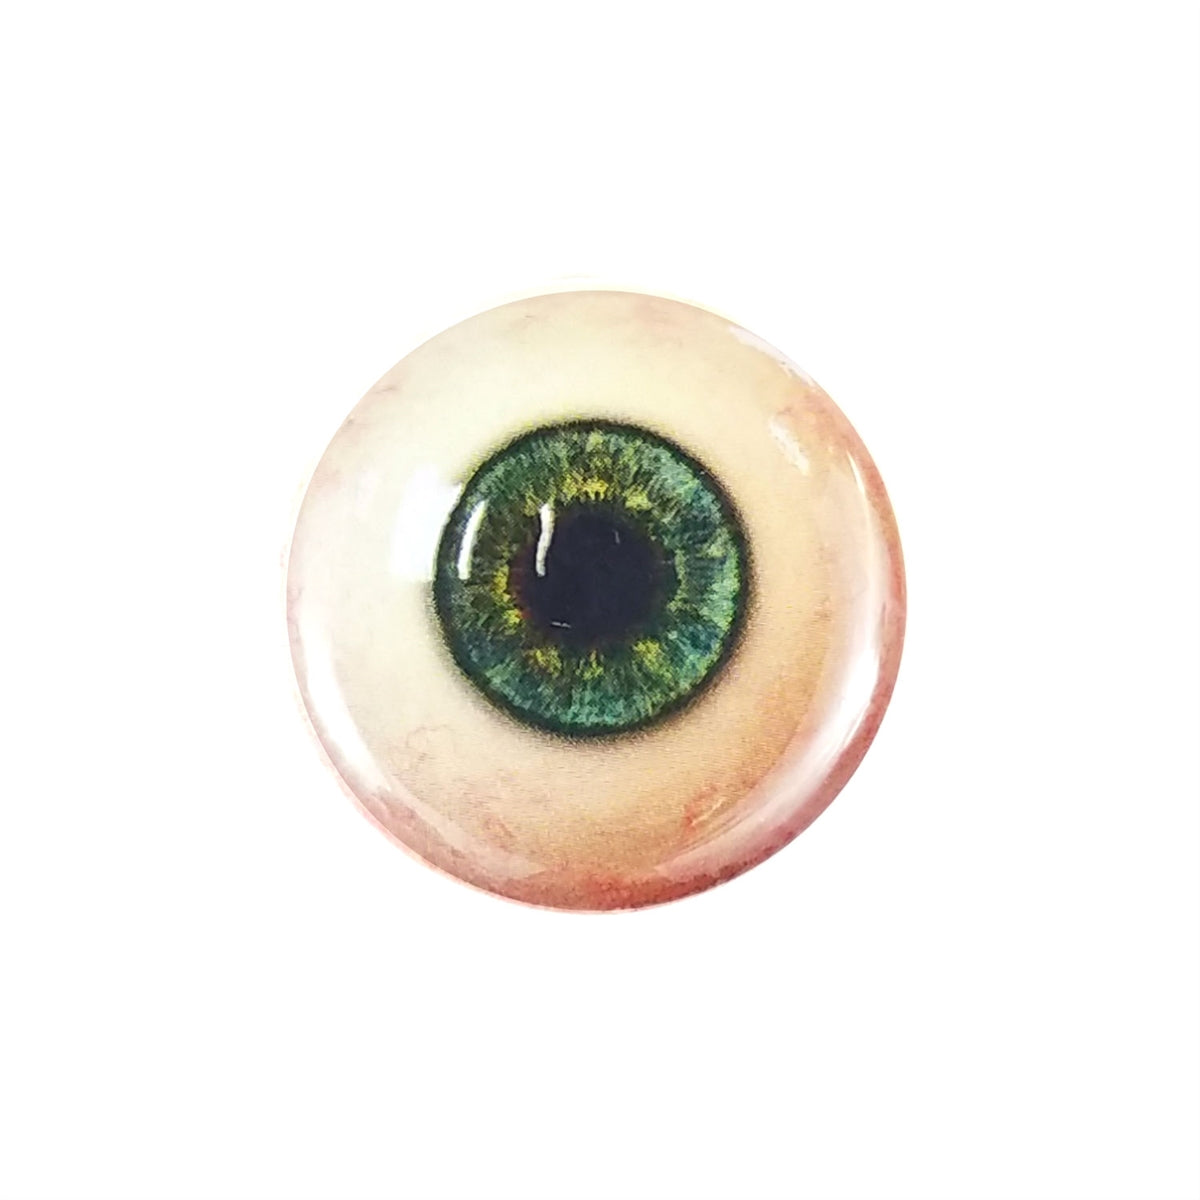 photorealistic green irised eyeball 1.5" round metal pinback button